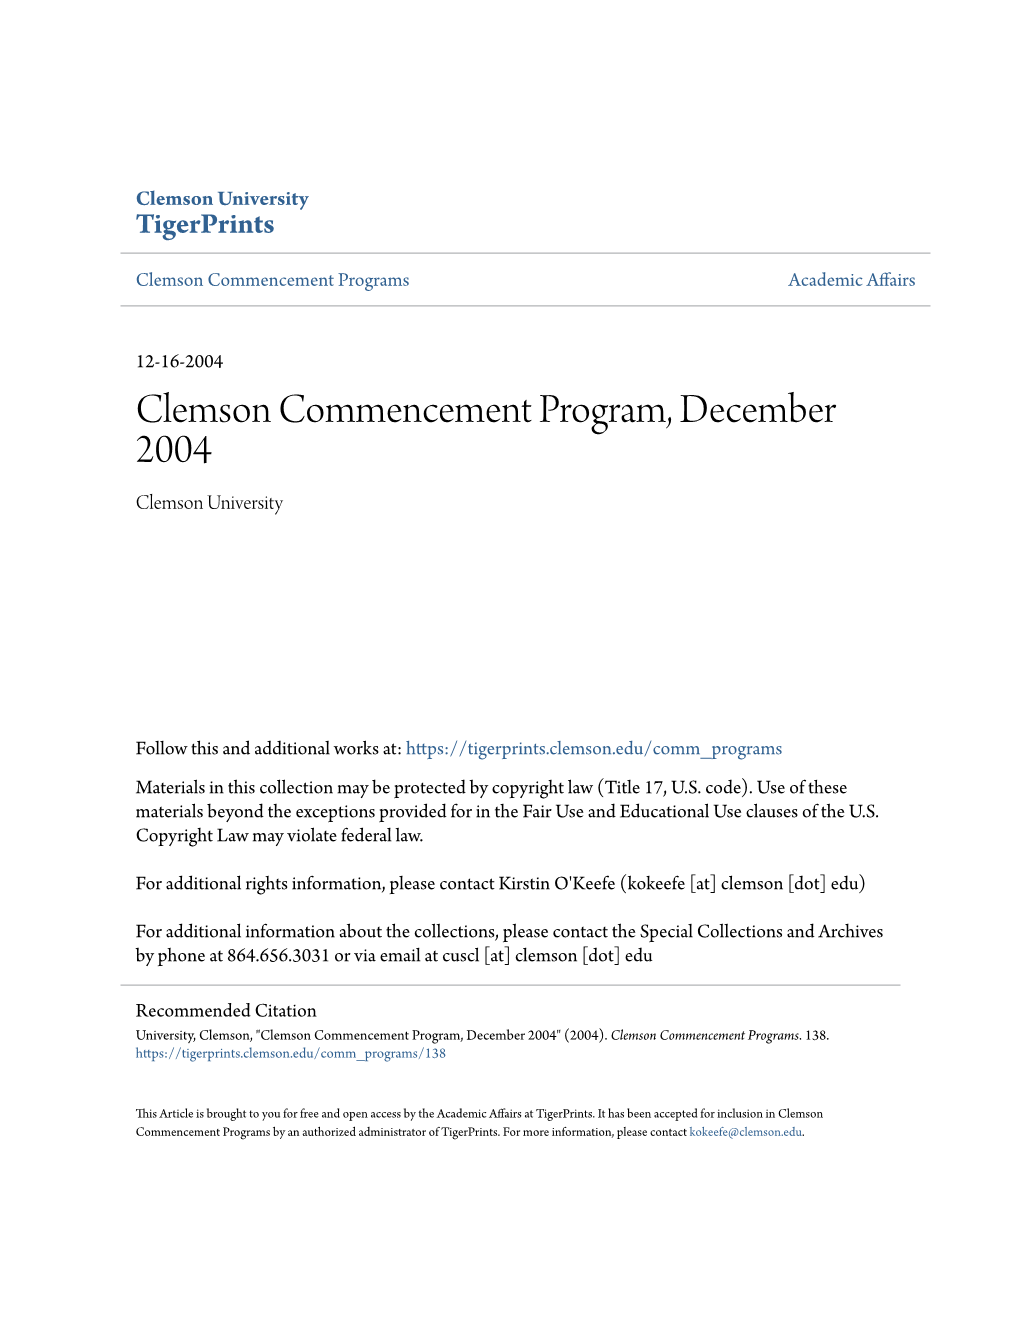 Clemson Commencement Program, December 2004 Clemson University